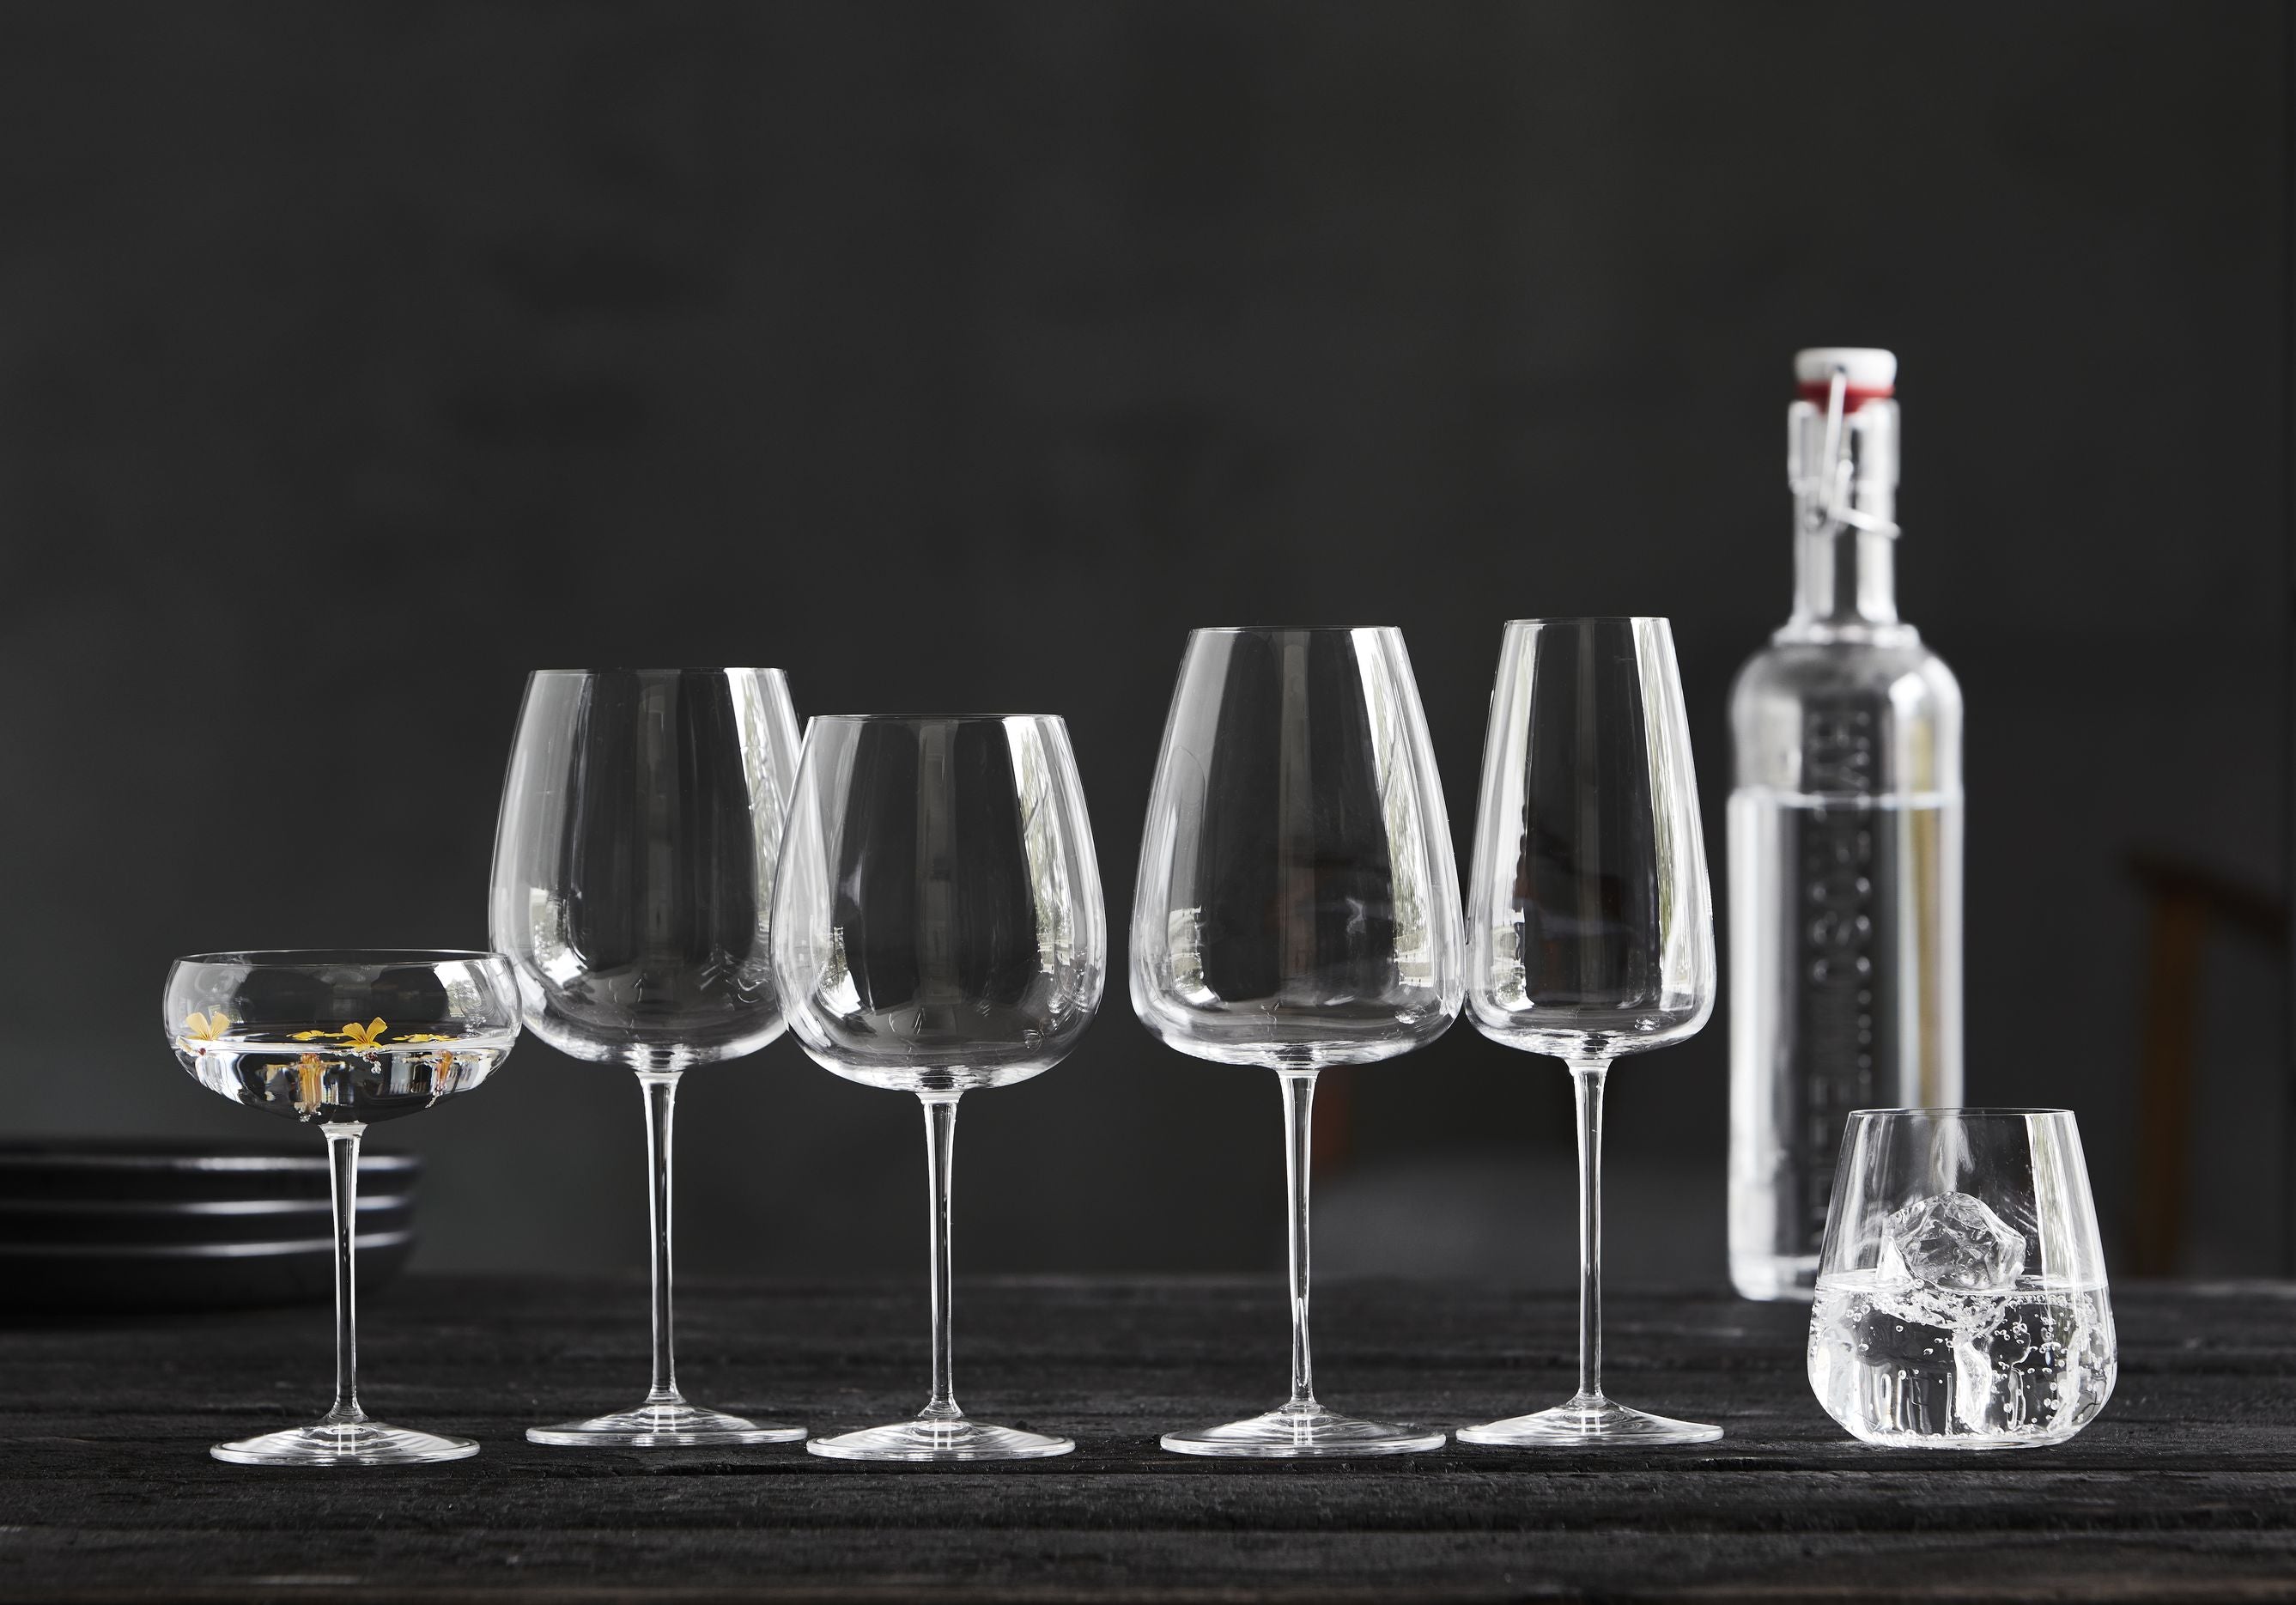 Luigi Bormioli Talismano Cocktail Glass/Martini Glass, 2 Pieces